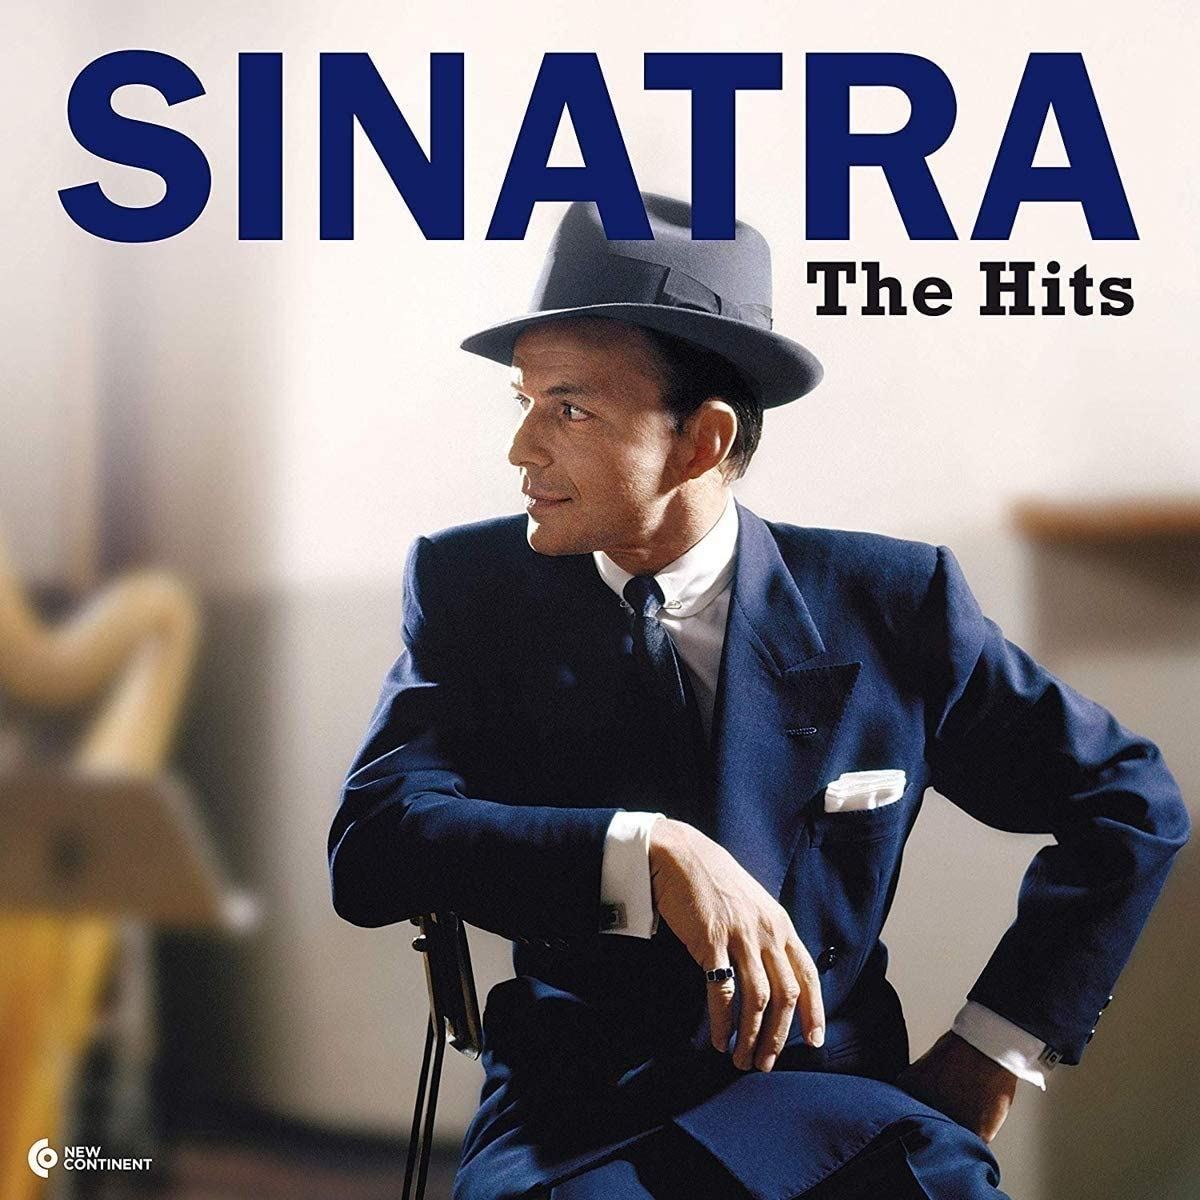 Фрэнк синатра хиты. Sinatra the Hits пластинка. Пластинка Frank Sinatra. Фрэнк Синатра обложка альбома. Sinatra Greatest Hits винил.